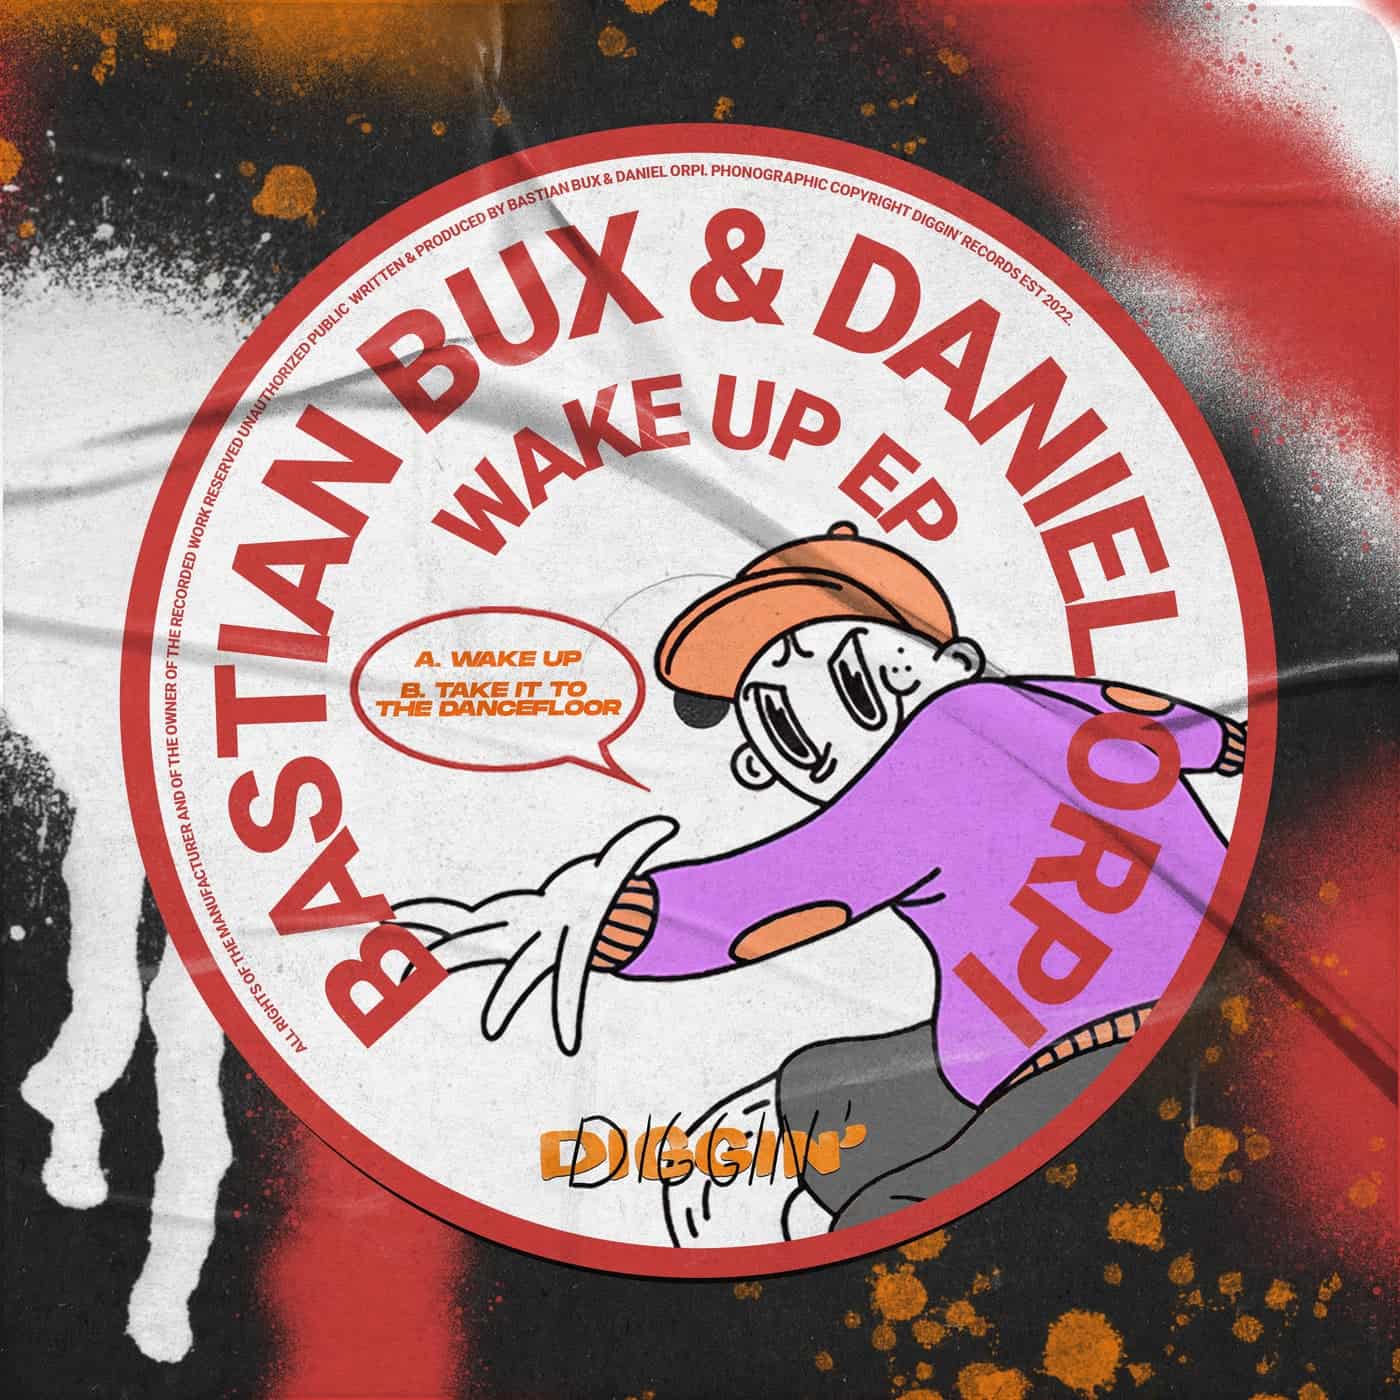 image cover: Bastian Bux & Daniel Orpi - Wake Up on Diggin' Records